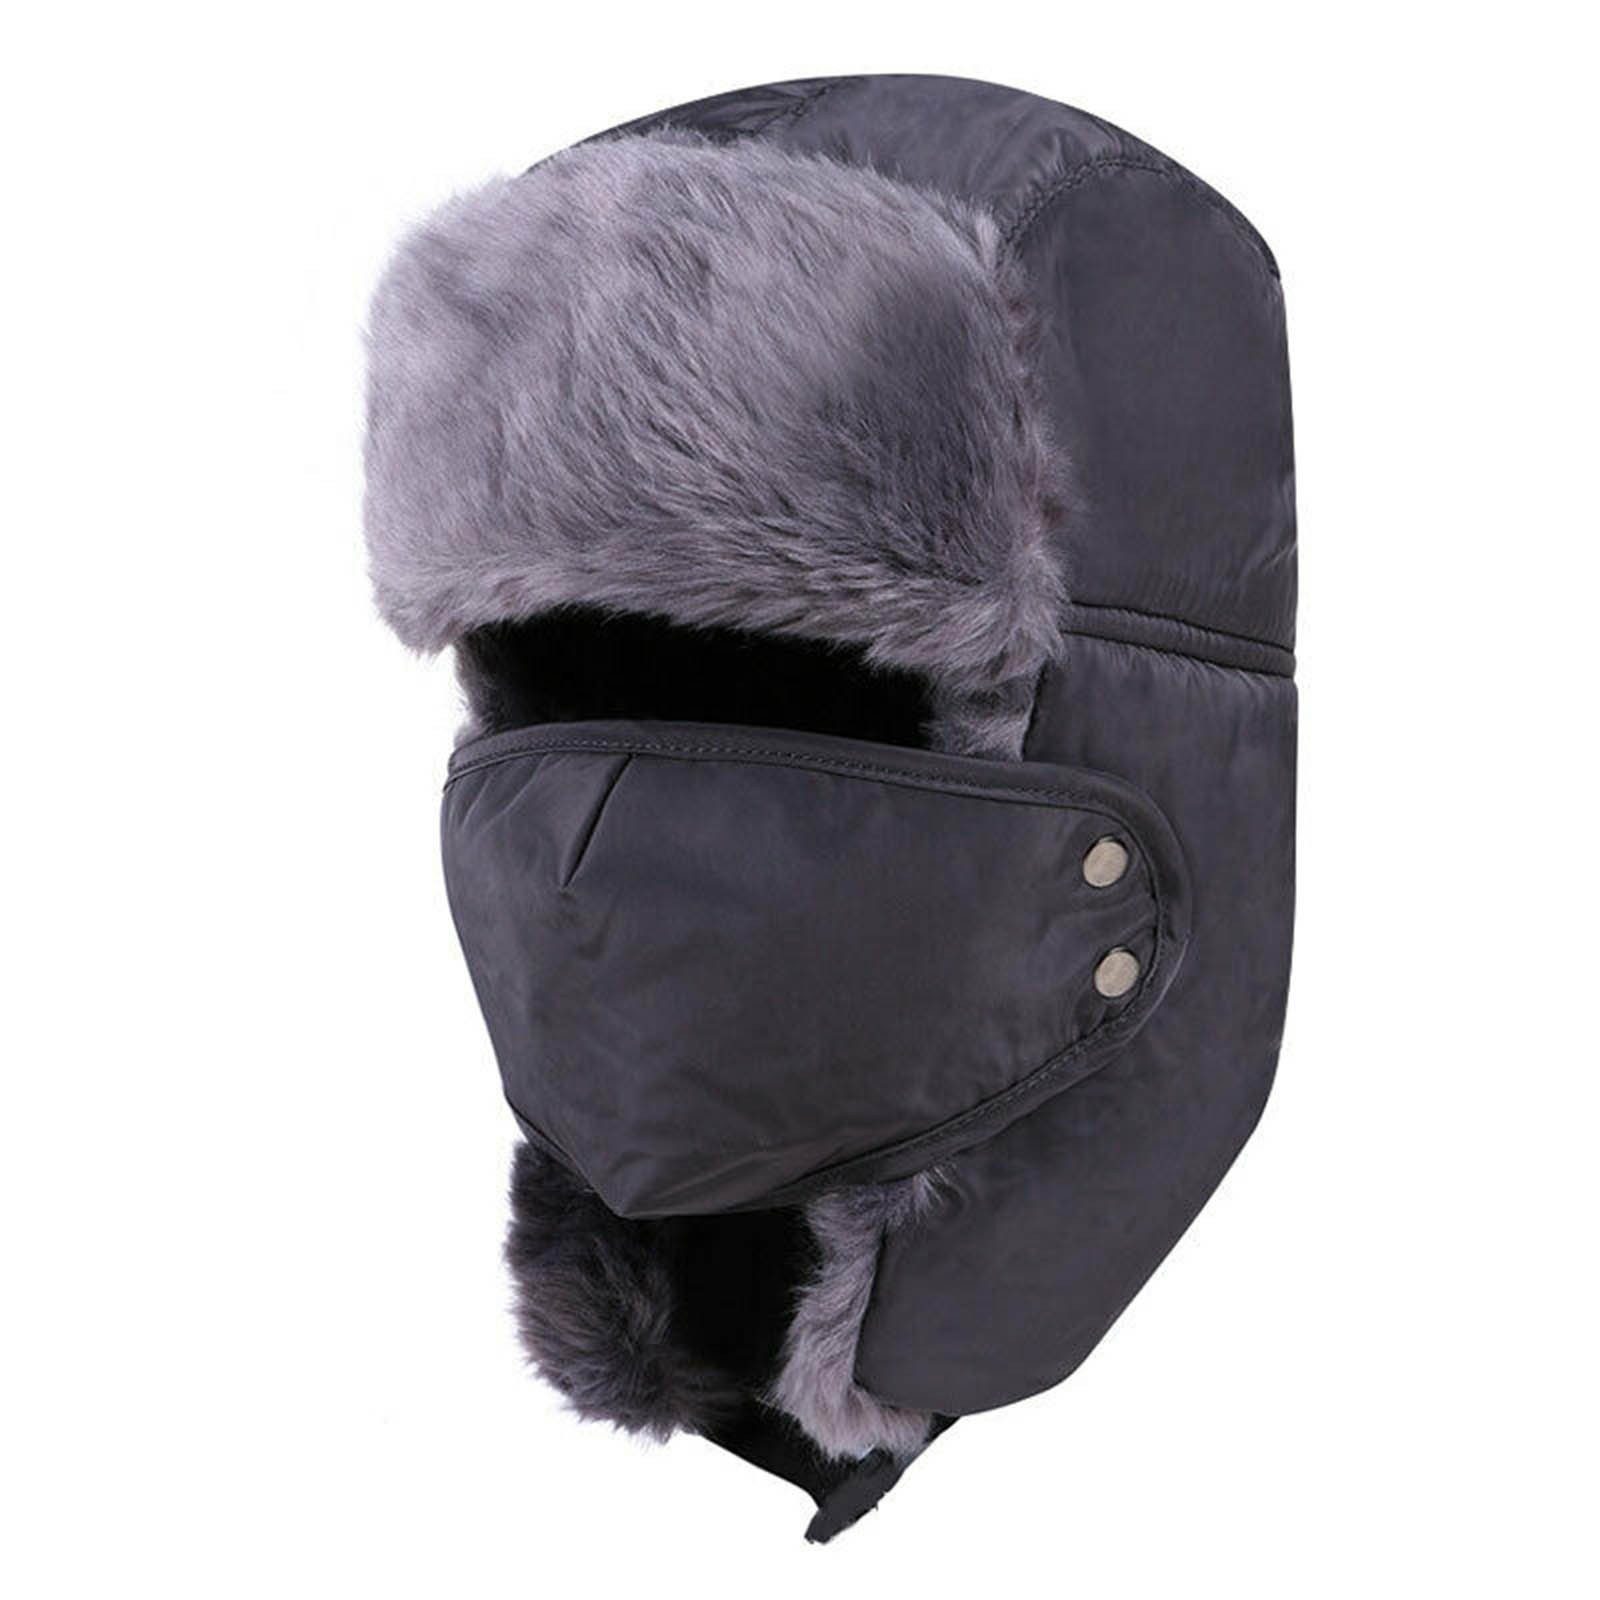 Hüte Blusmart Fleecemütze Winter Warme Winddicht Ohr Kälte-Proof Outdoor Kappe Plüsch grau